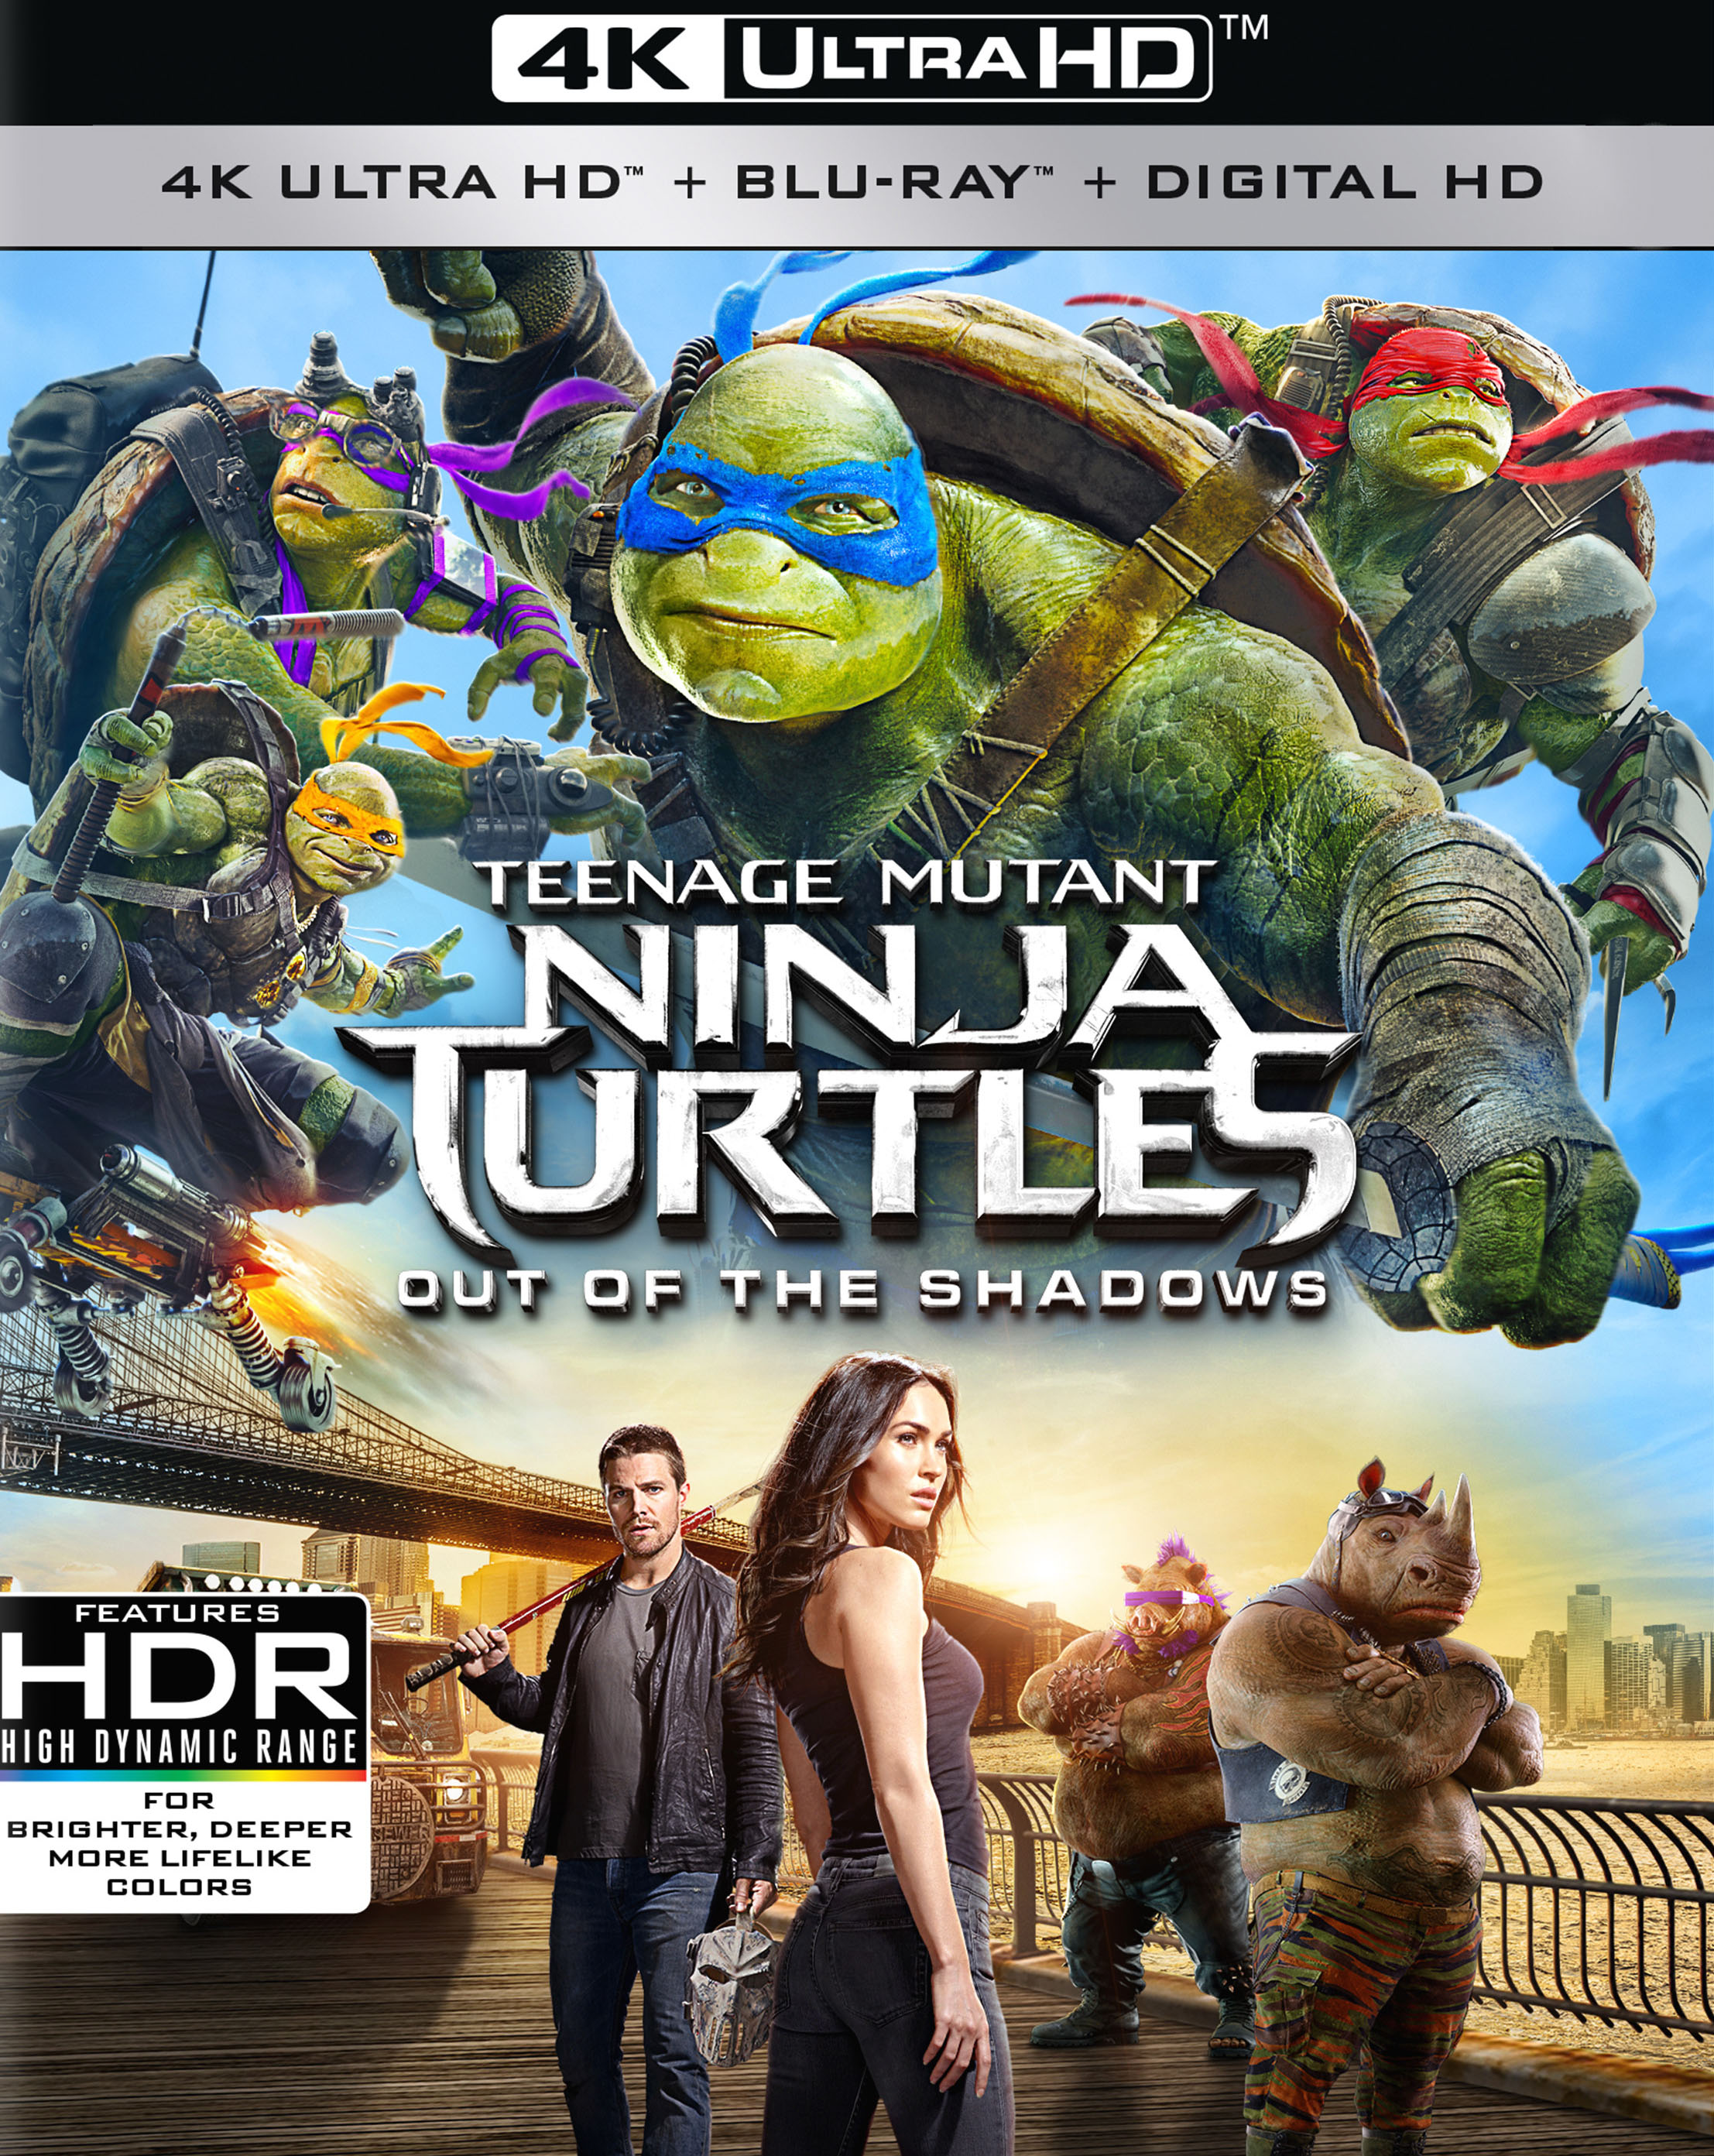 Teenage Mutant Ninja Turtles Out Of The Shadows Theme for Windows